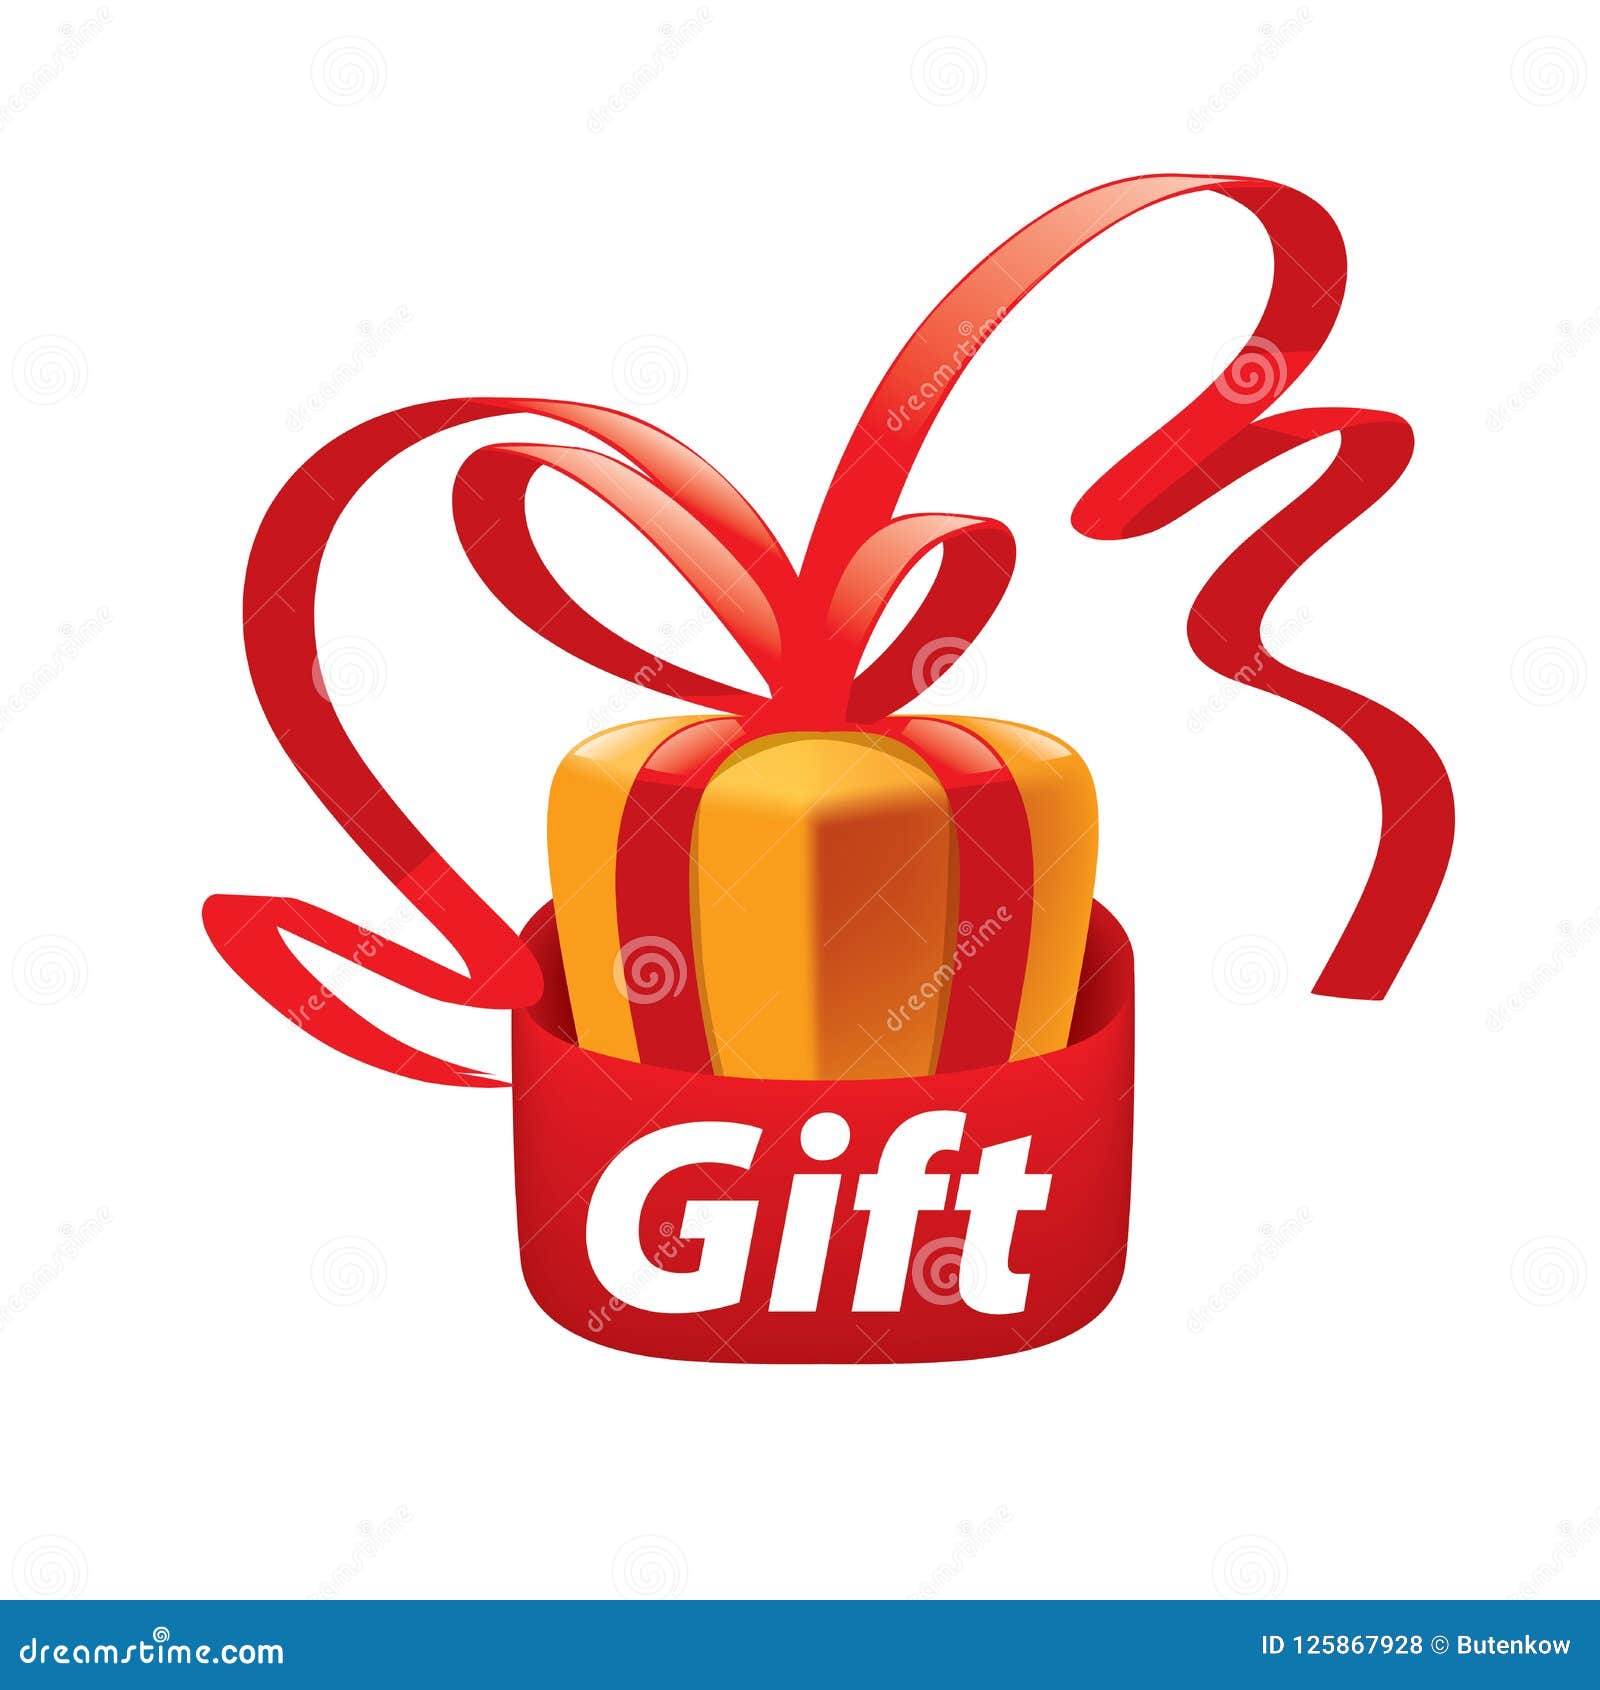 Красивое слово подарки. Подарок логотип. Gift надпись. Подарок с надписью подарок. Логотип подарка на прозрачном фоне.